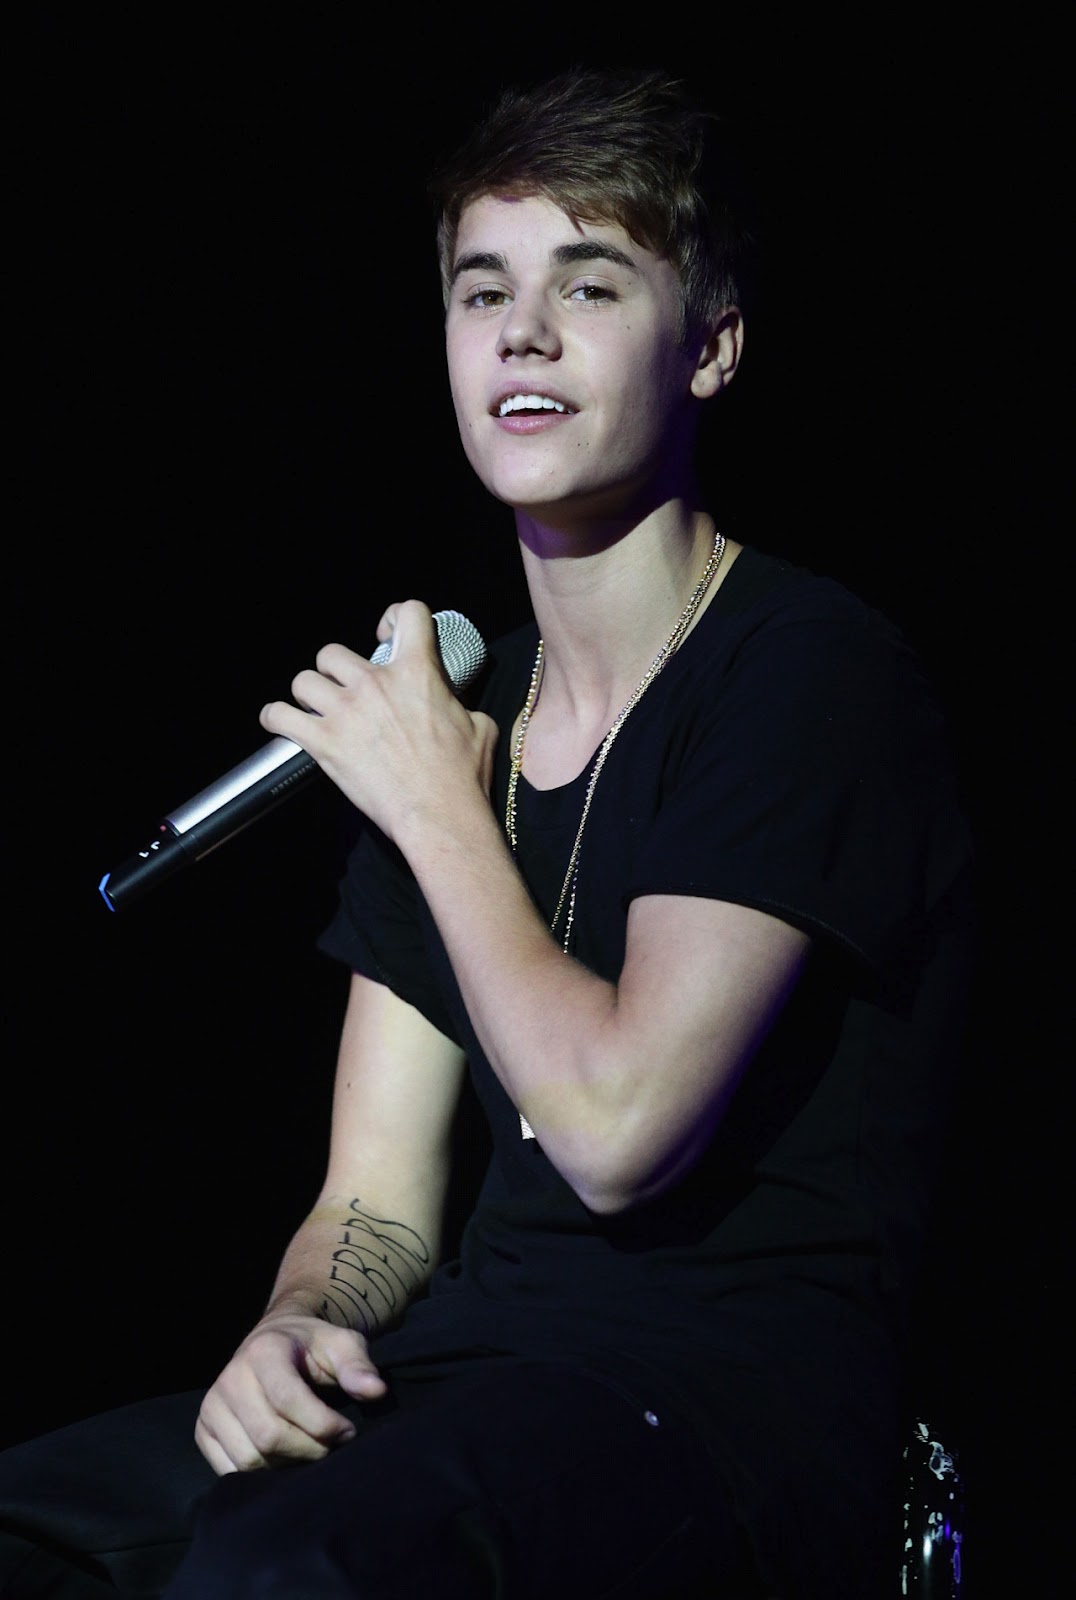 Justin Bieber News: Justin Bieber performing in Milan (Photos HQ)